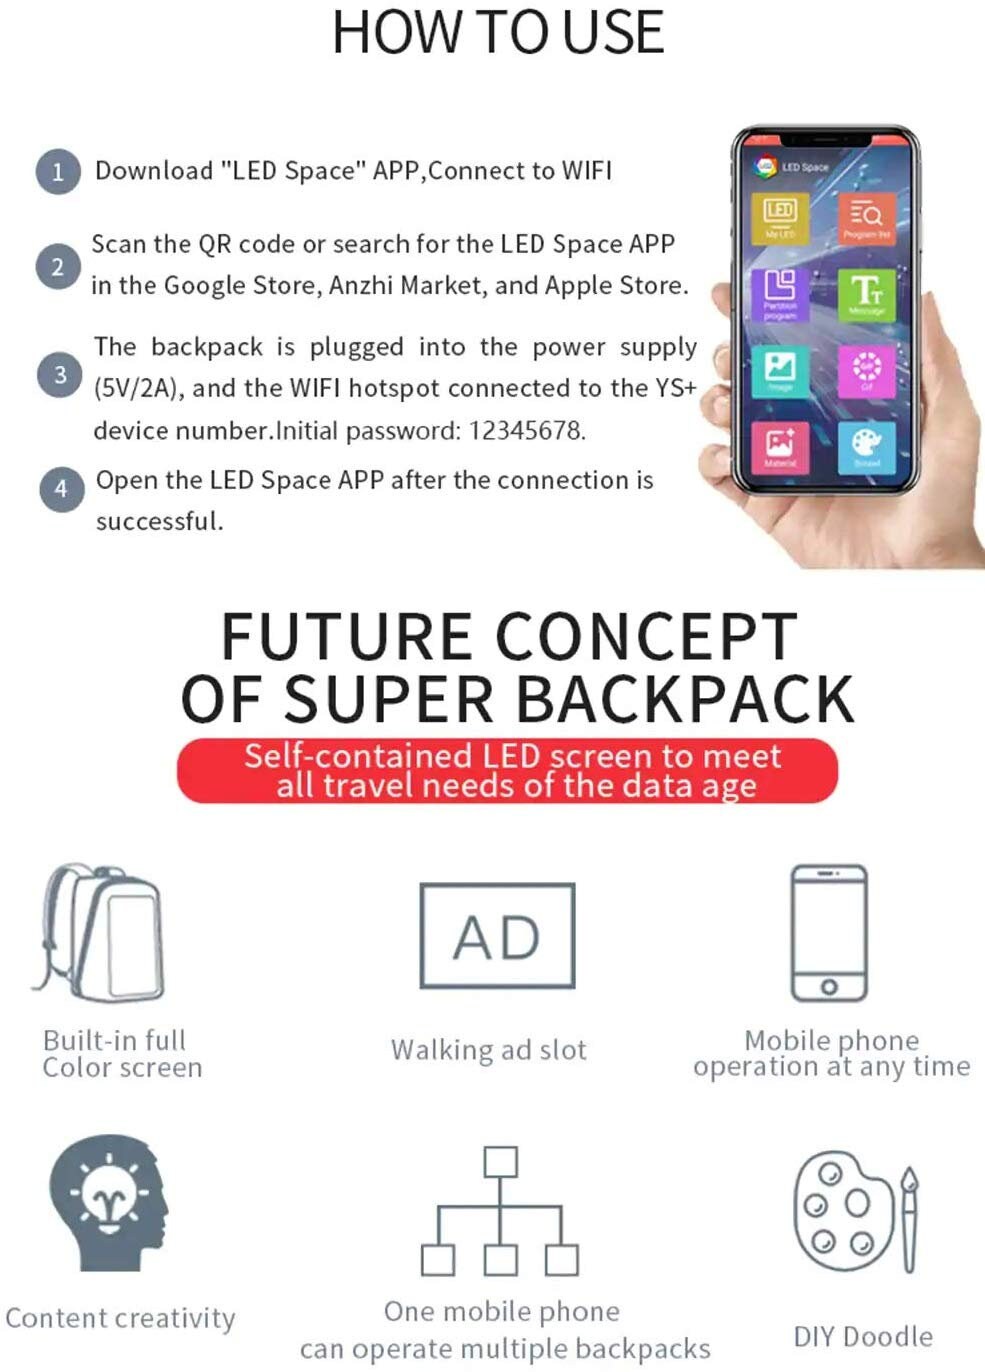 Smart LED Backpack Cool Black Customizable Laptop Backpack Innovative Gift School Bag Dynamic Backpack Outdoor Fashion Advertising bag.